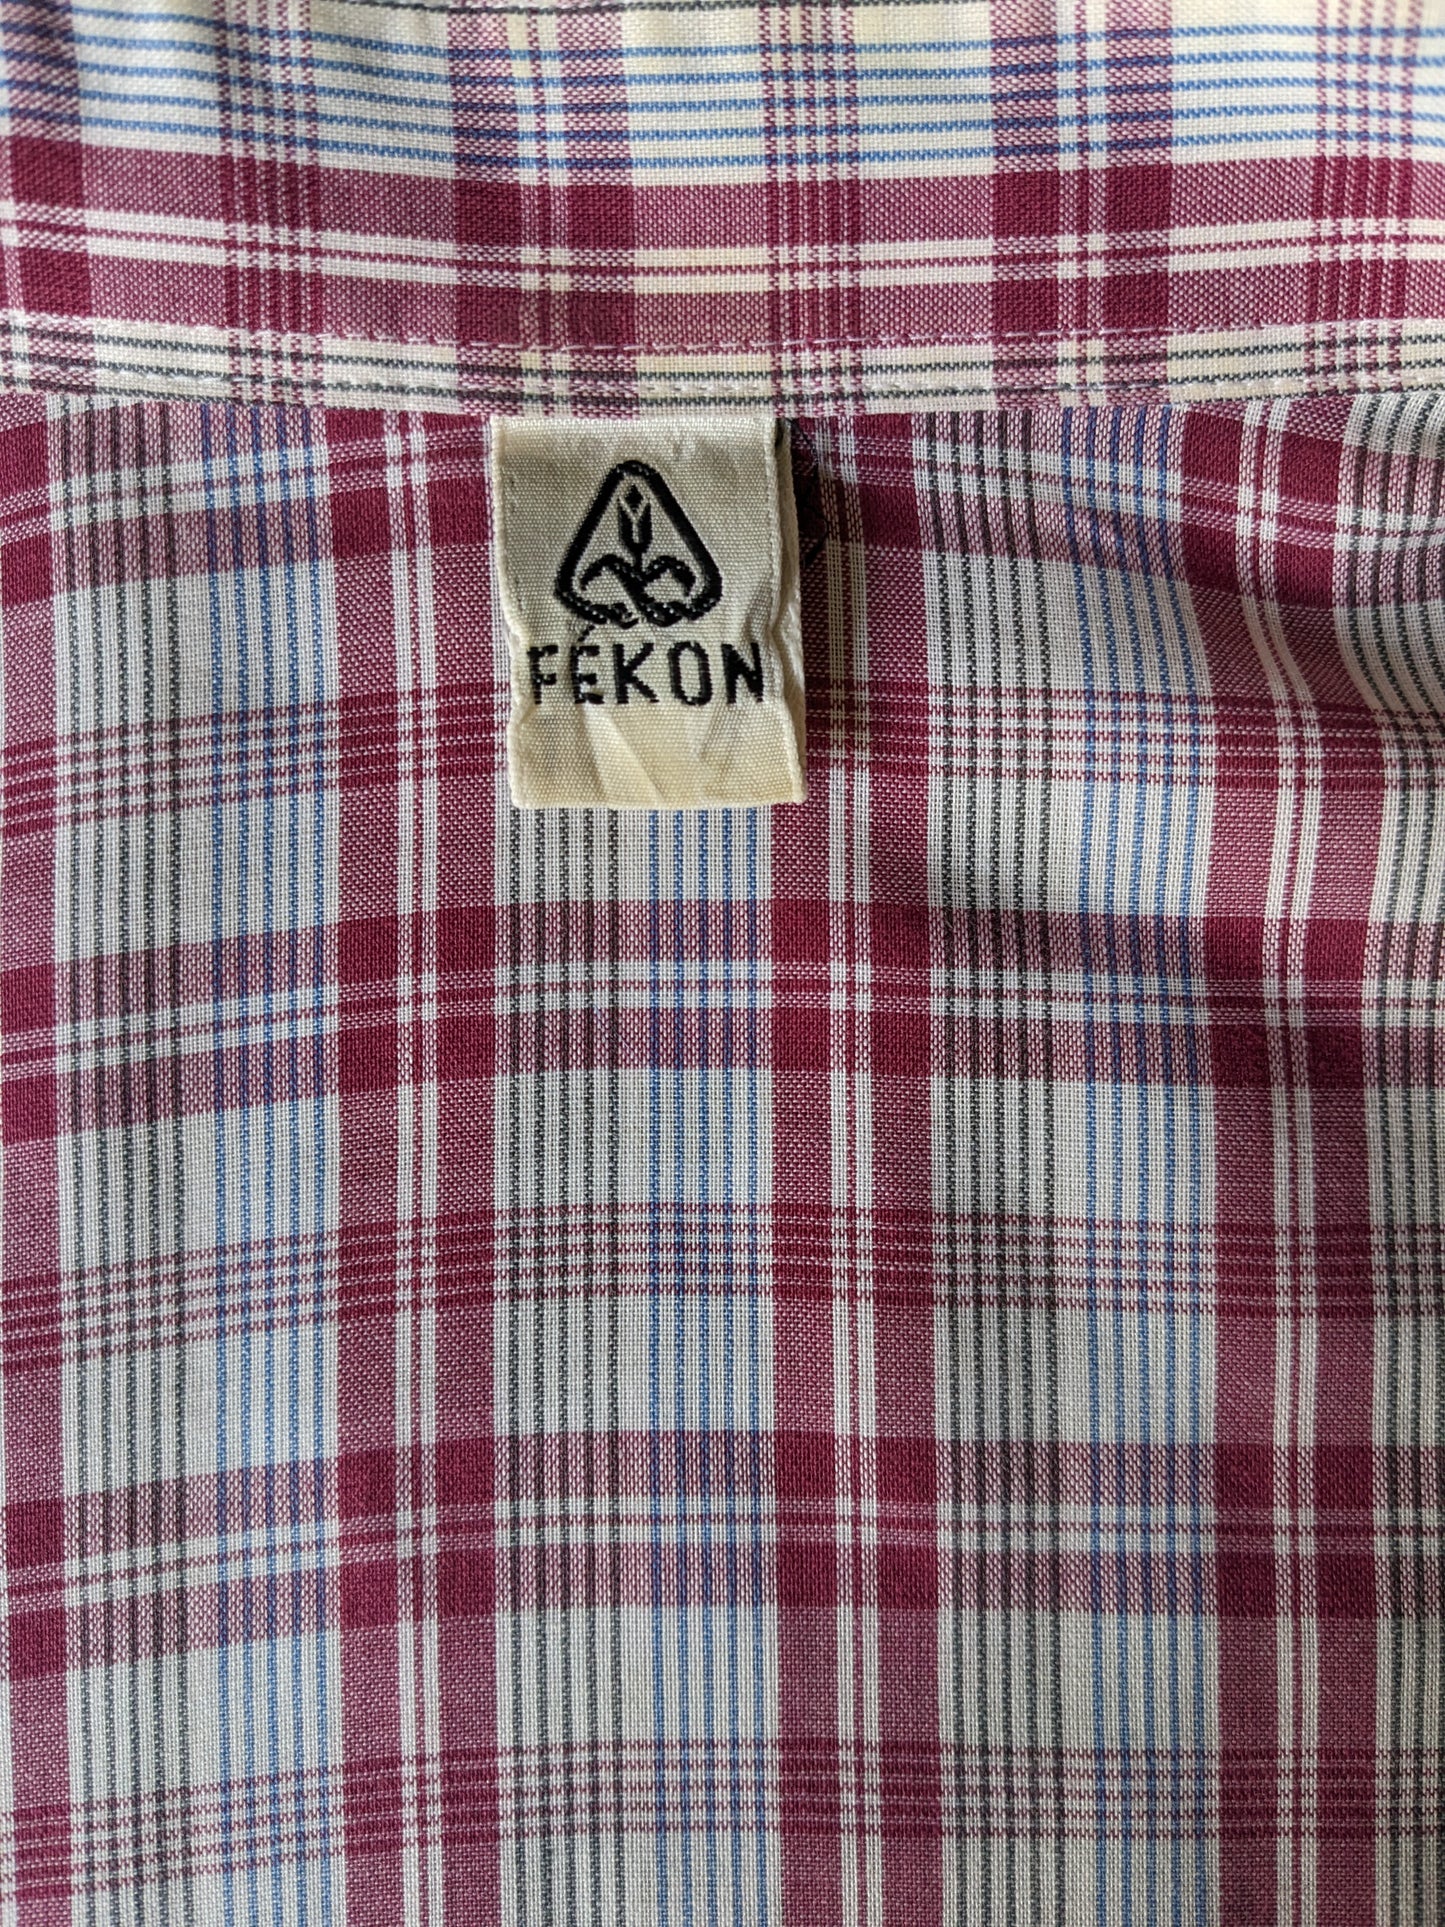 Vintage Fekon overhemd korte mouw. Rood Blauw Geel geruit. Maat L.